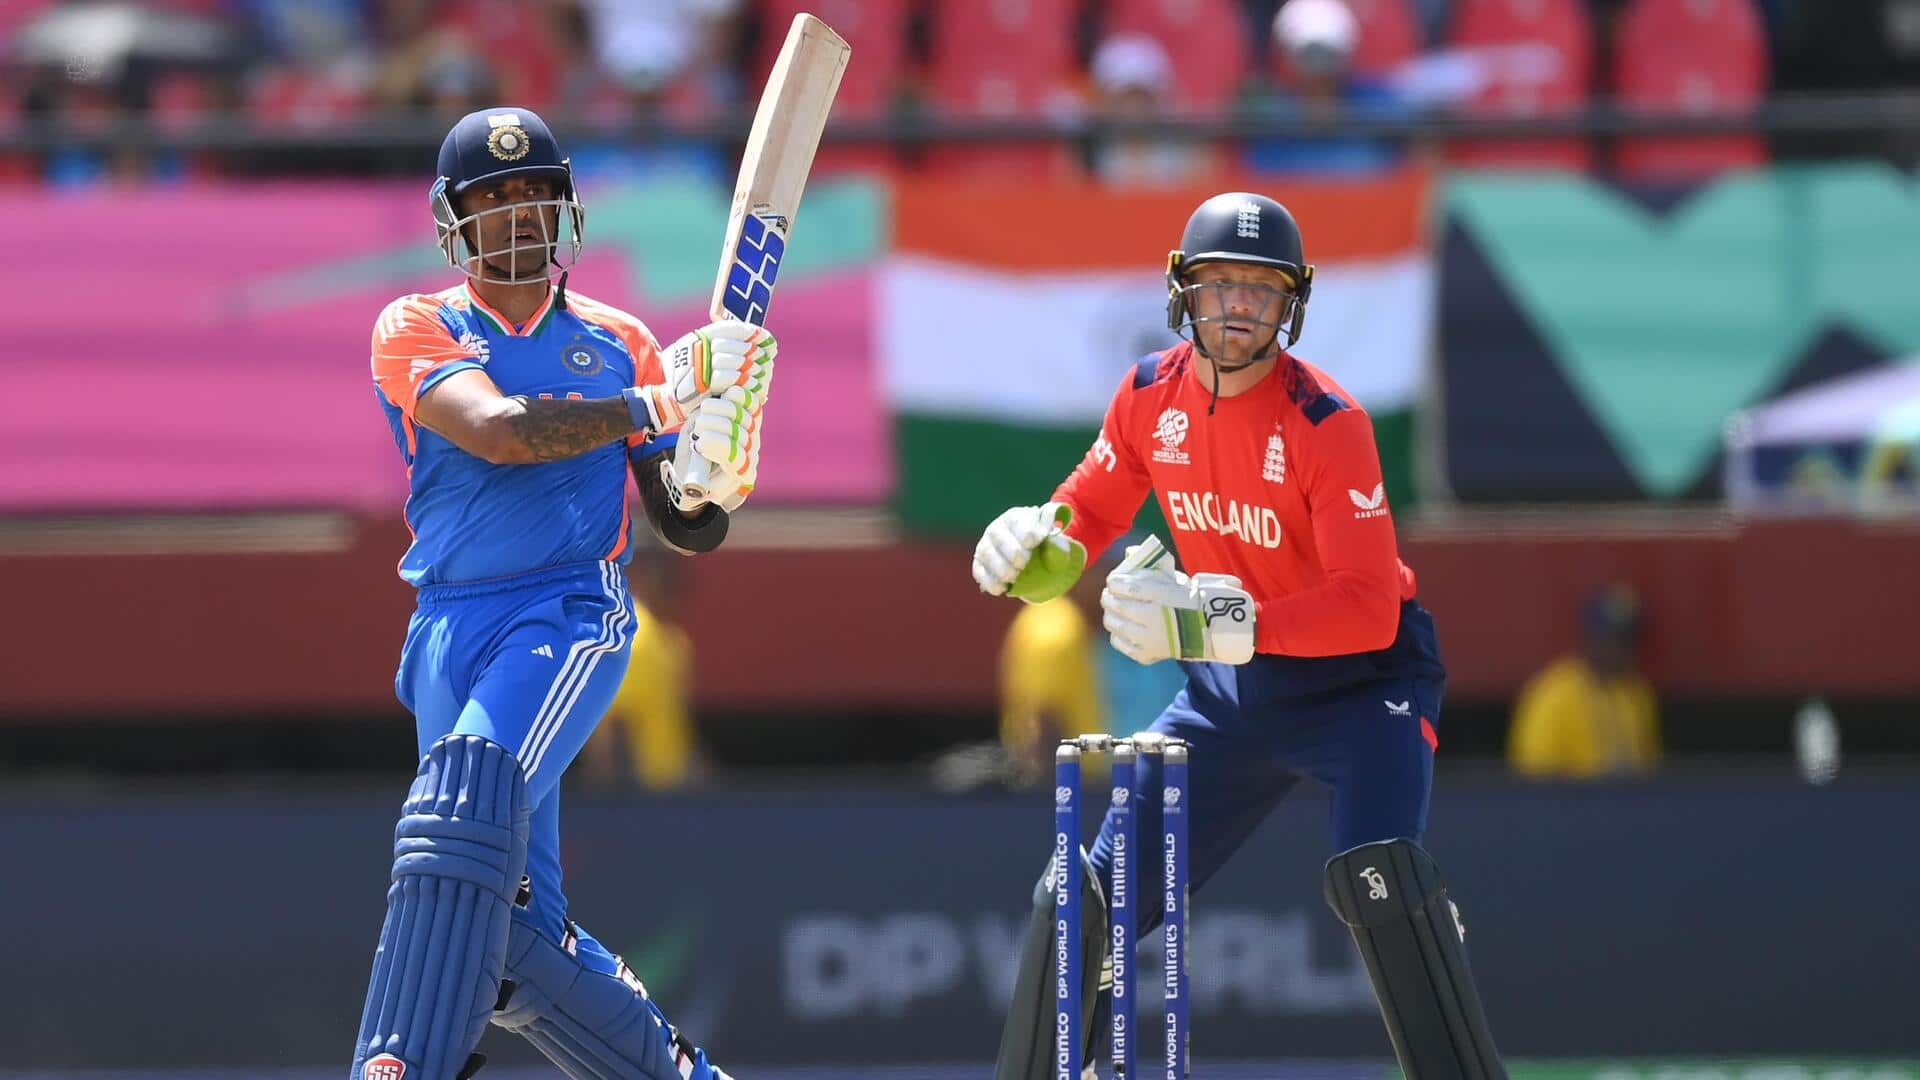 Suryakumar Yadav completes 7,500 runs in T20 cricket: Key stats